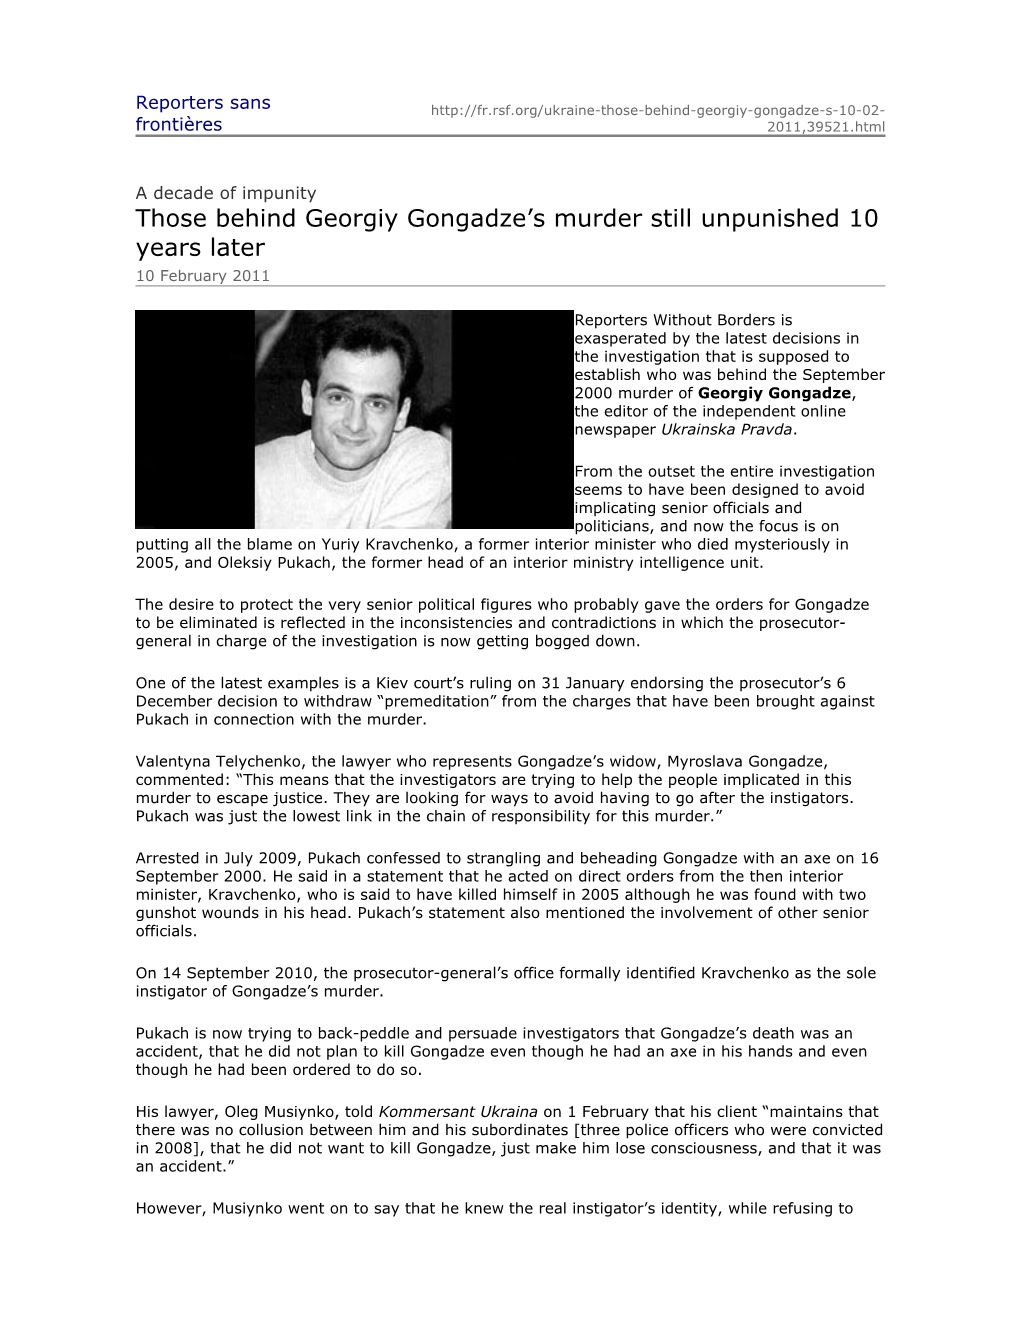 Those Behind Georgiy Gongadze's Murder Still Unpunished 10 Years Later